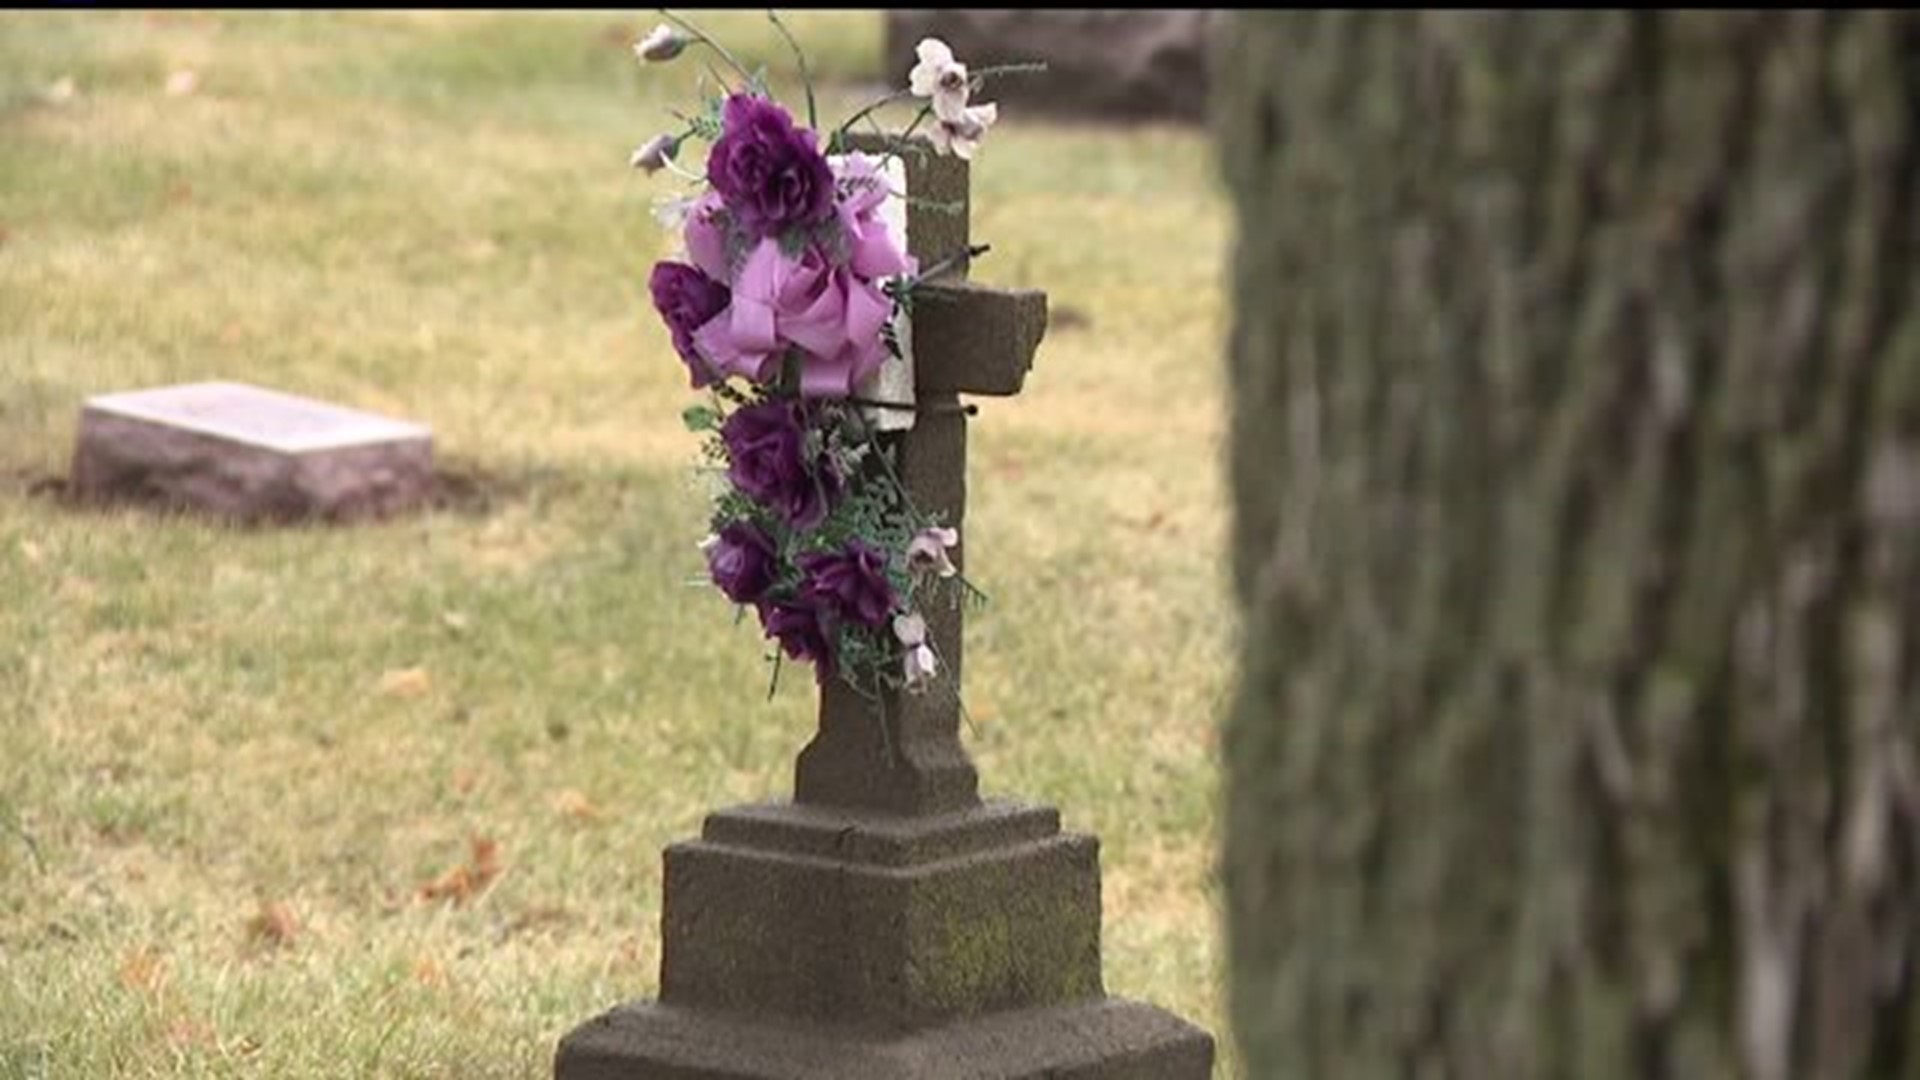 East Moline looks to prohibit backyard burials